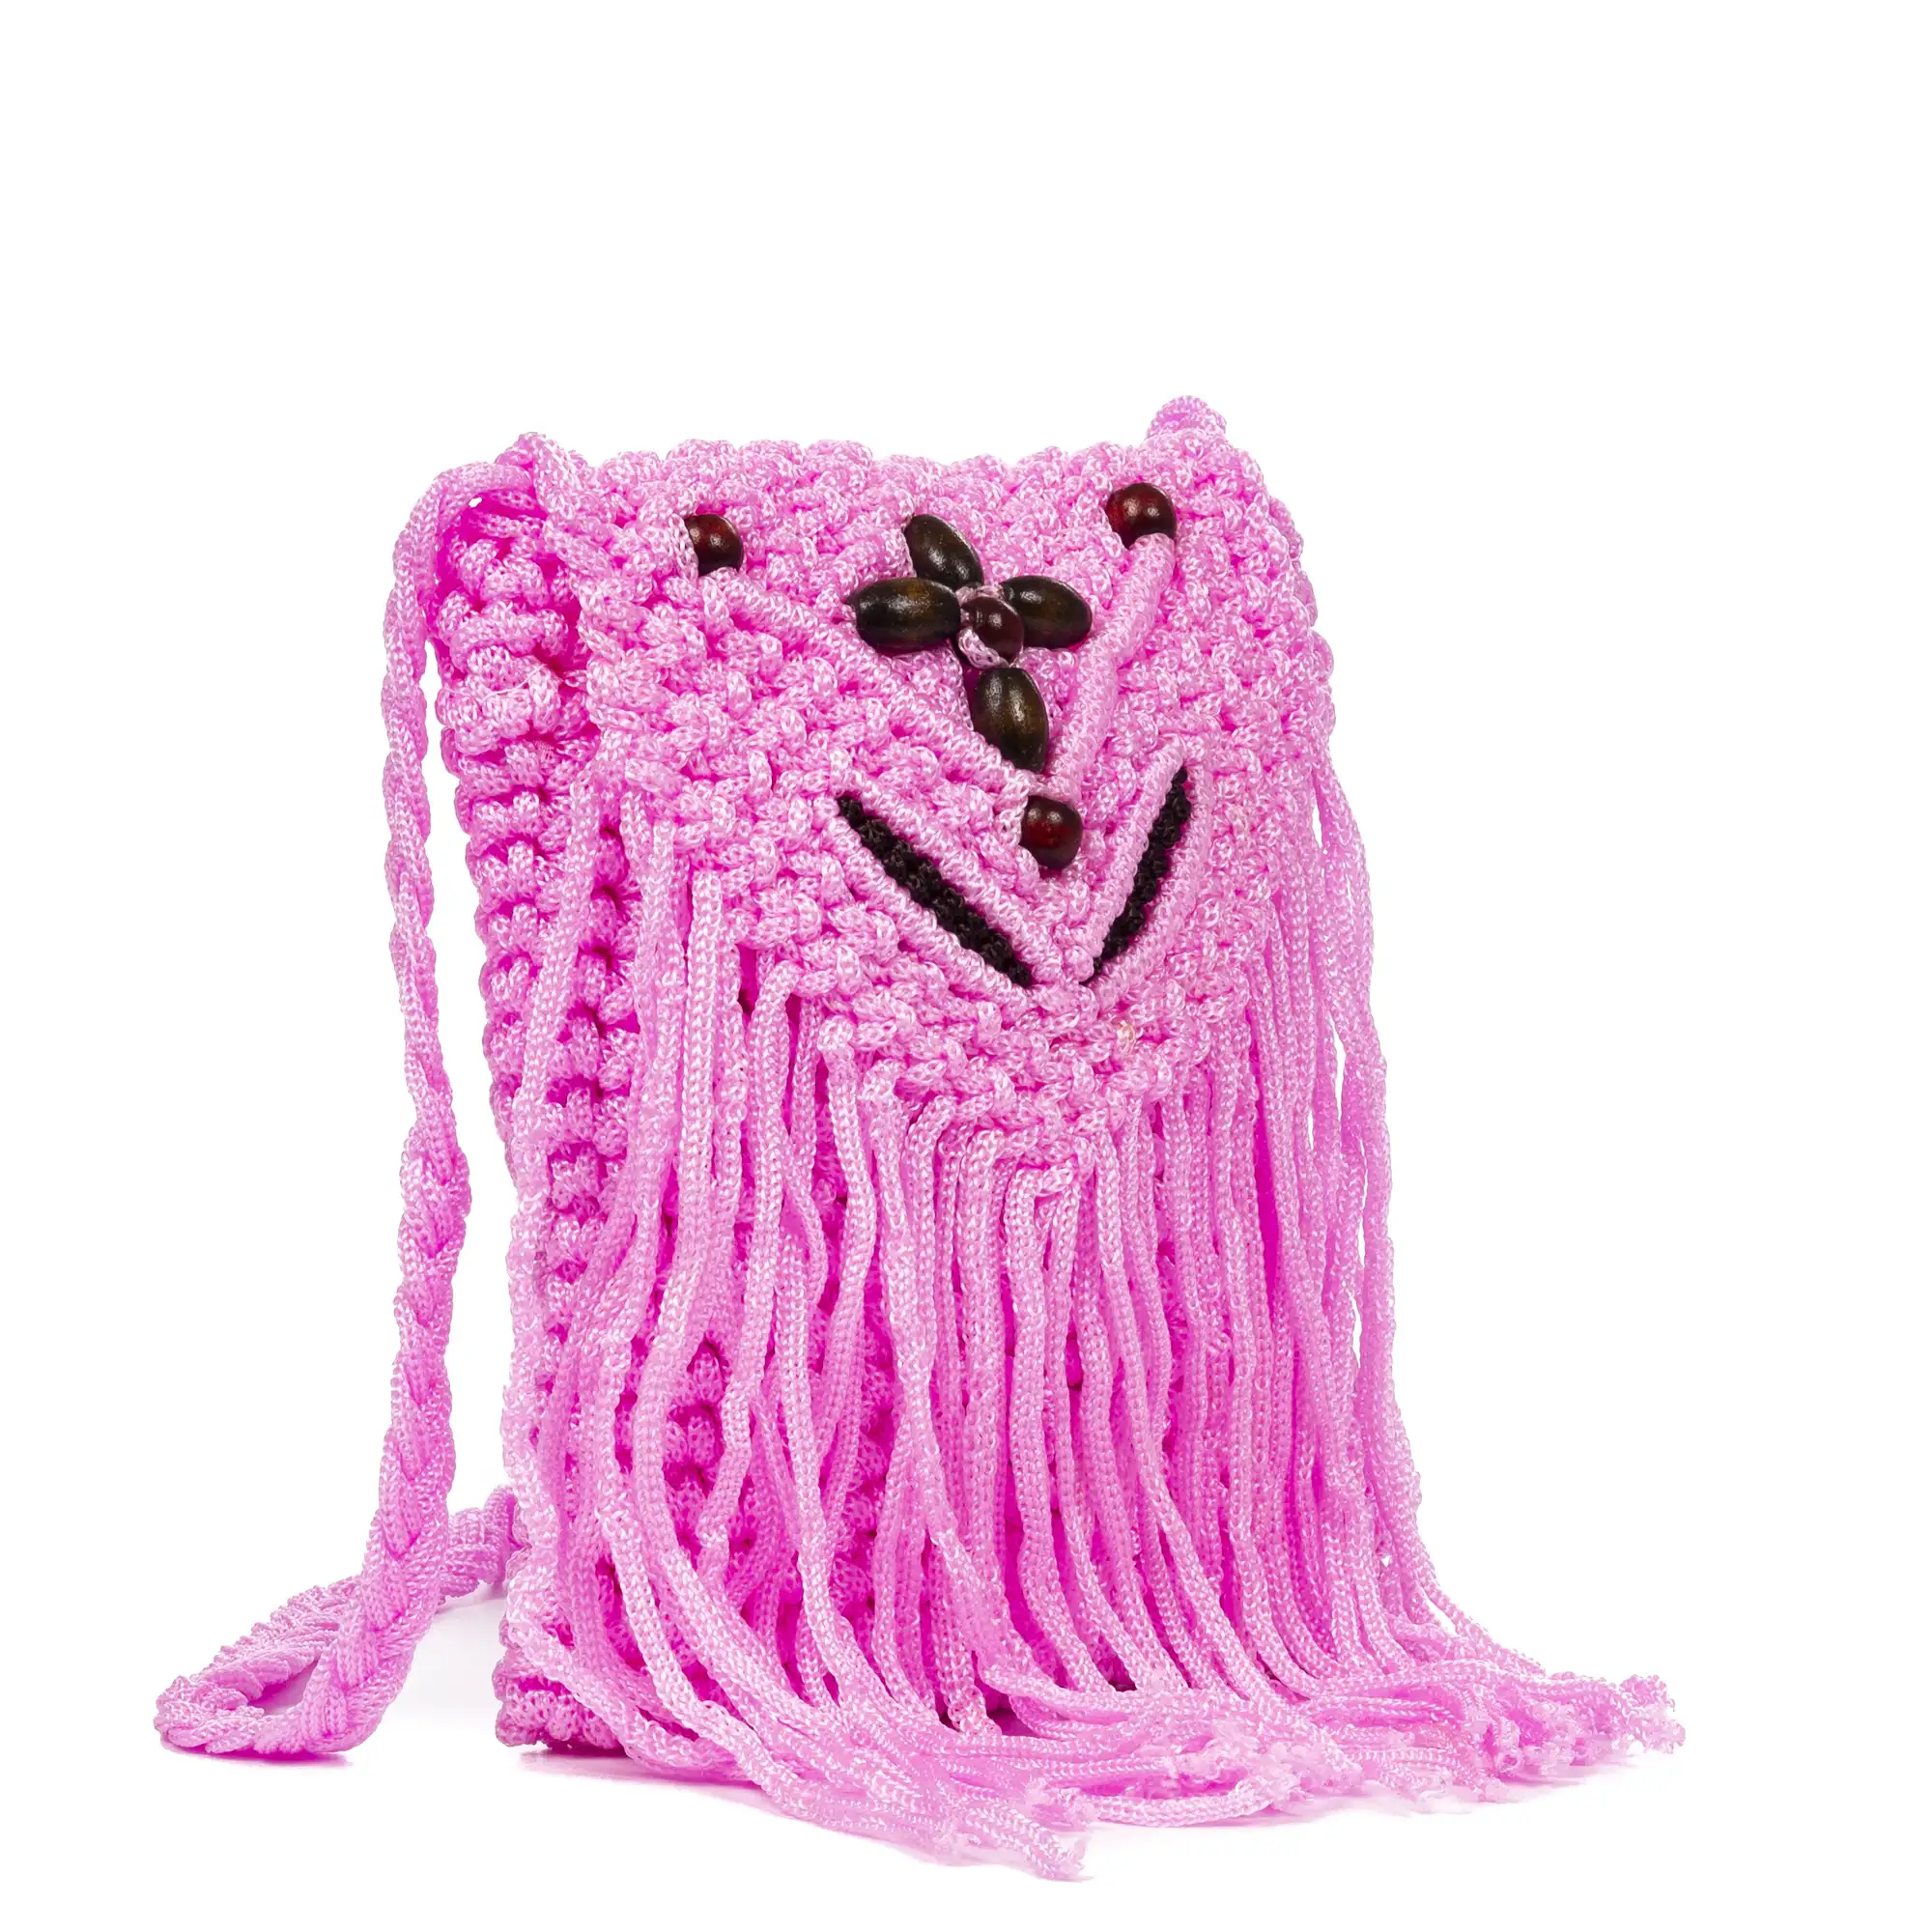  Gemona Bolso bandolera Mujer. Tejido Algodón Crochet  